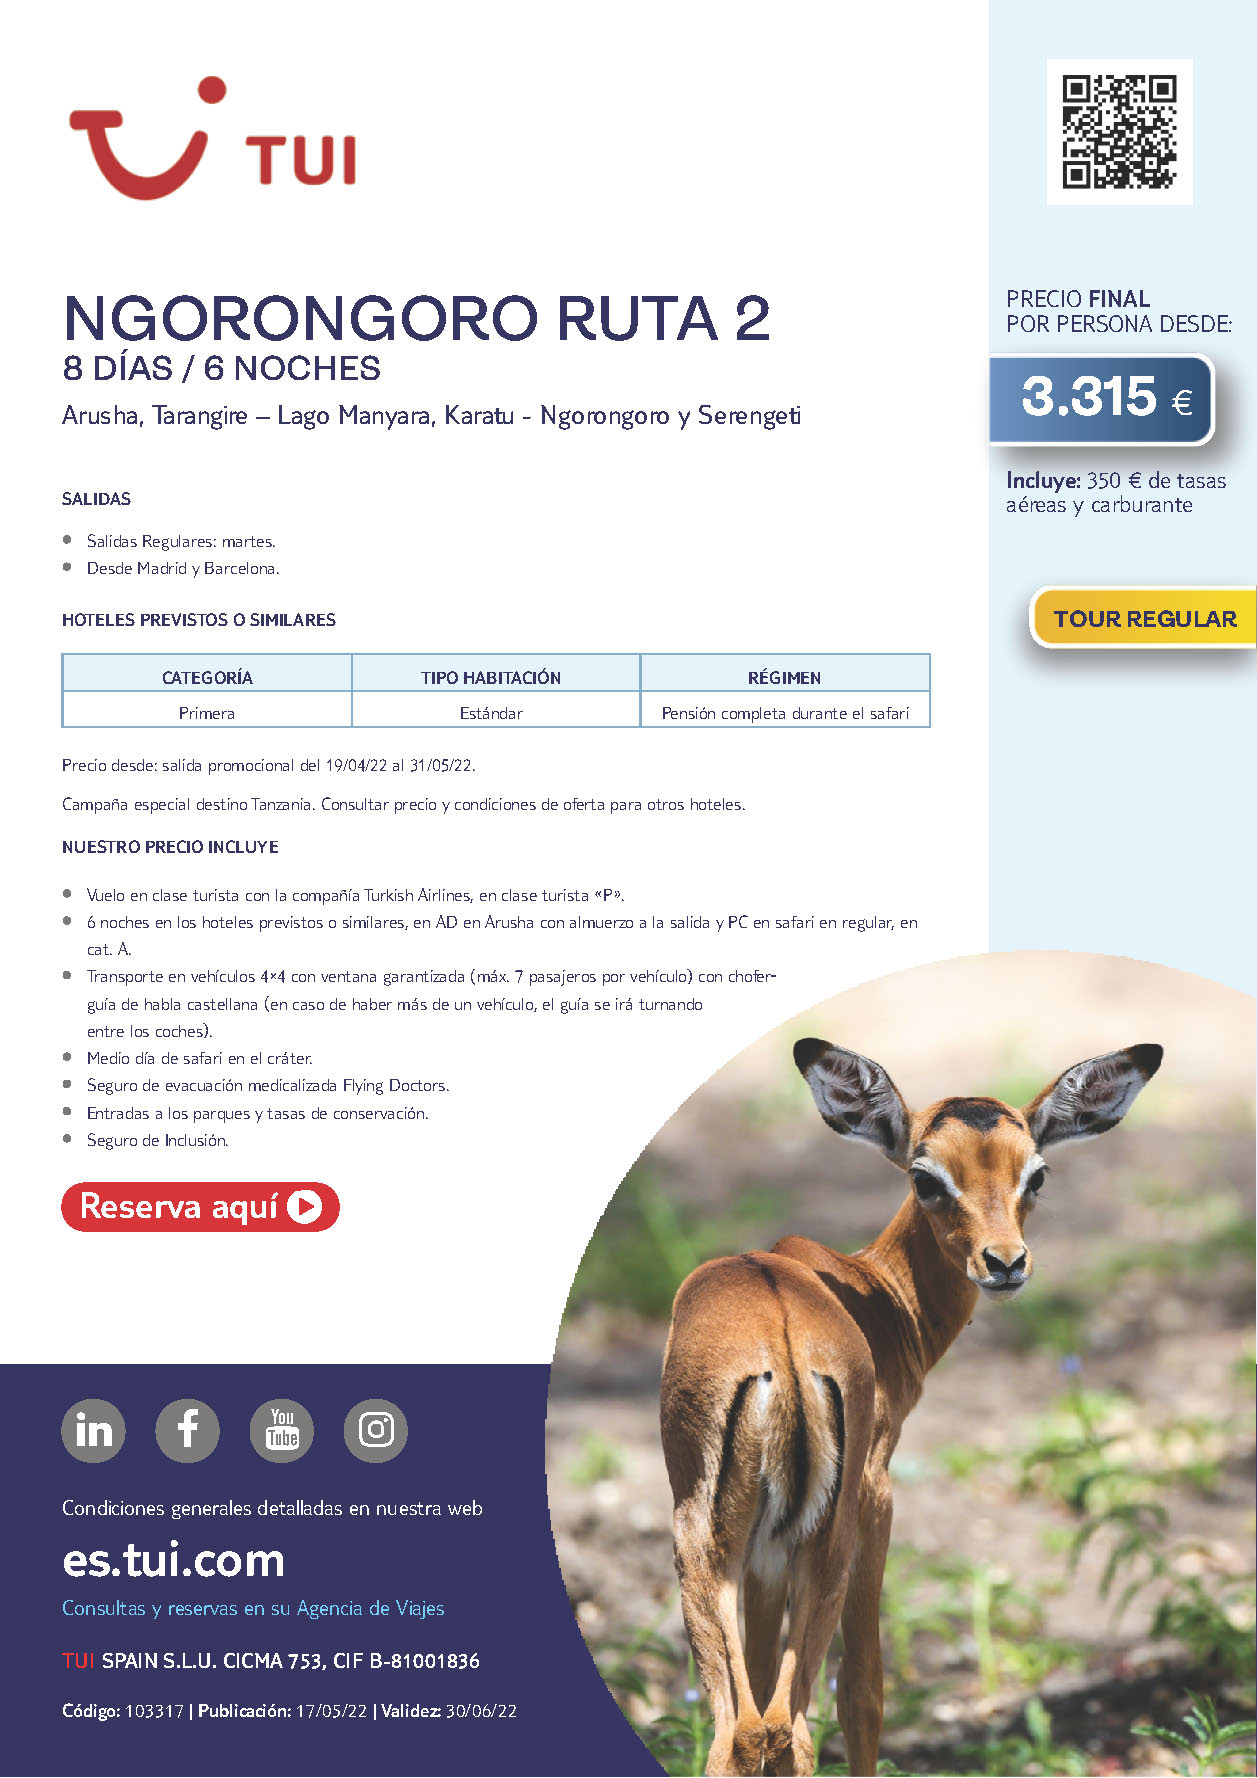 Oferta TUI Tanzania Safari Ngorongoro Ruta 2 9 dias Mayo a Diciembre 2022 salidas desde Madrid y Barcelona vuelos Turkish Airlines